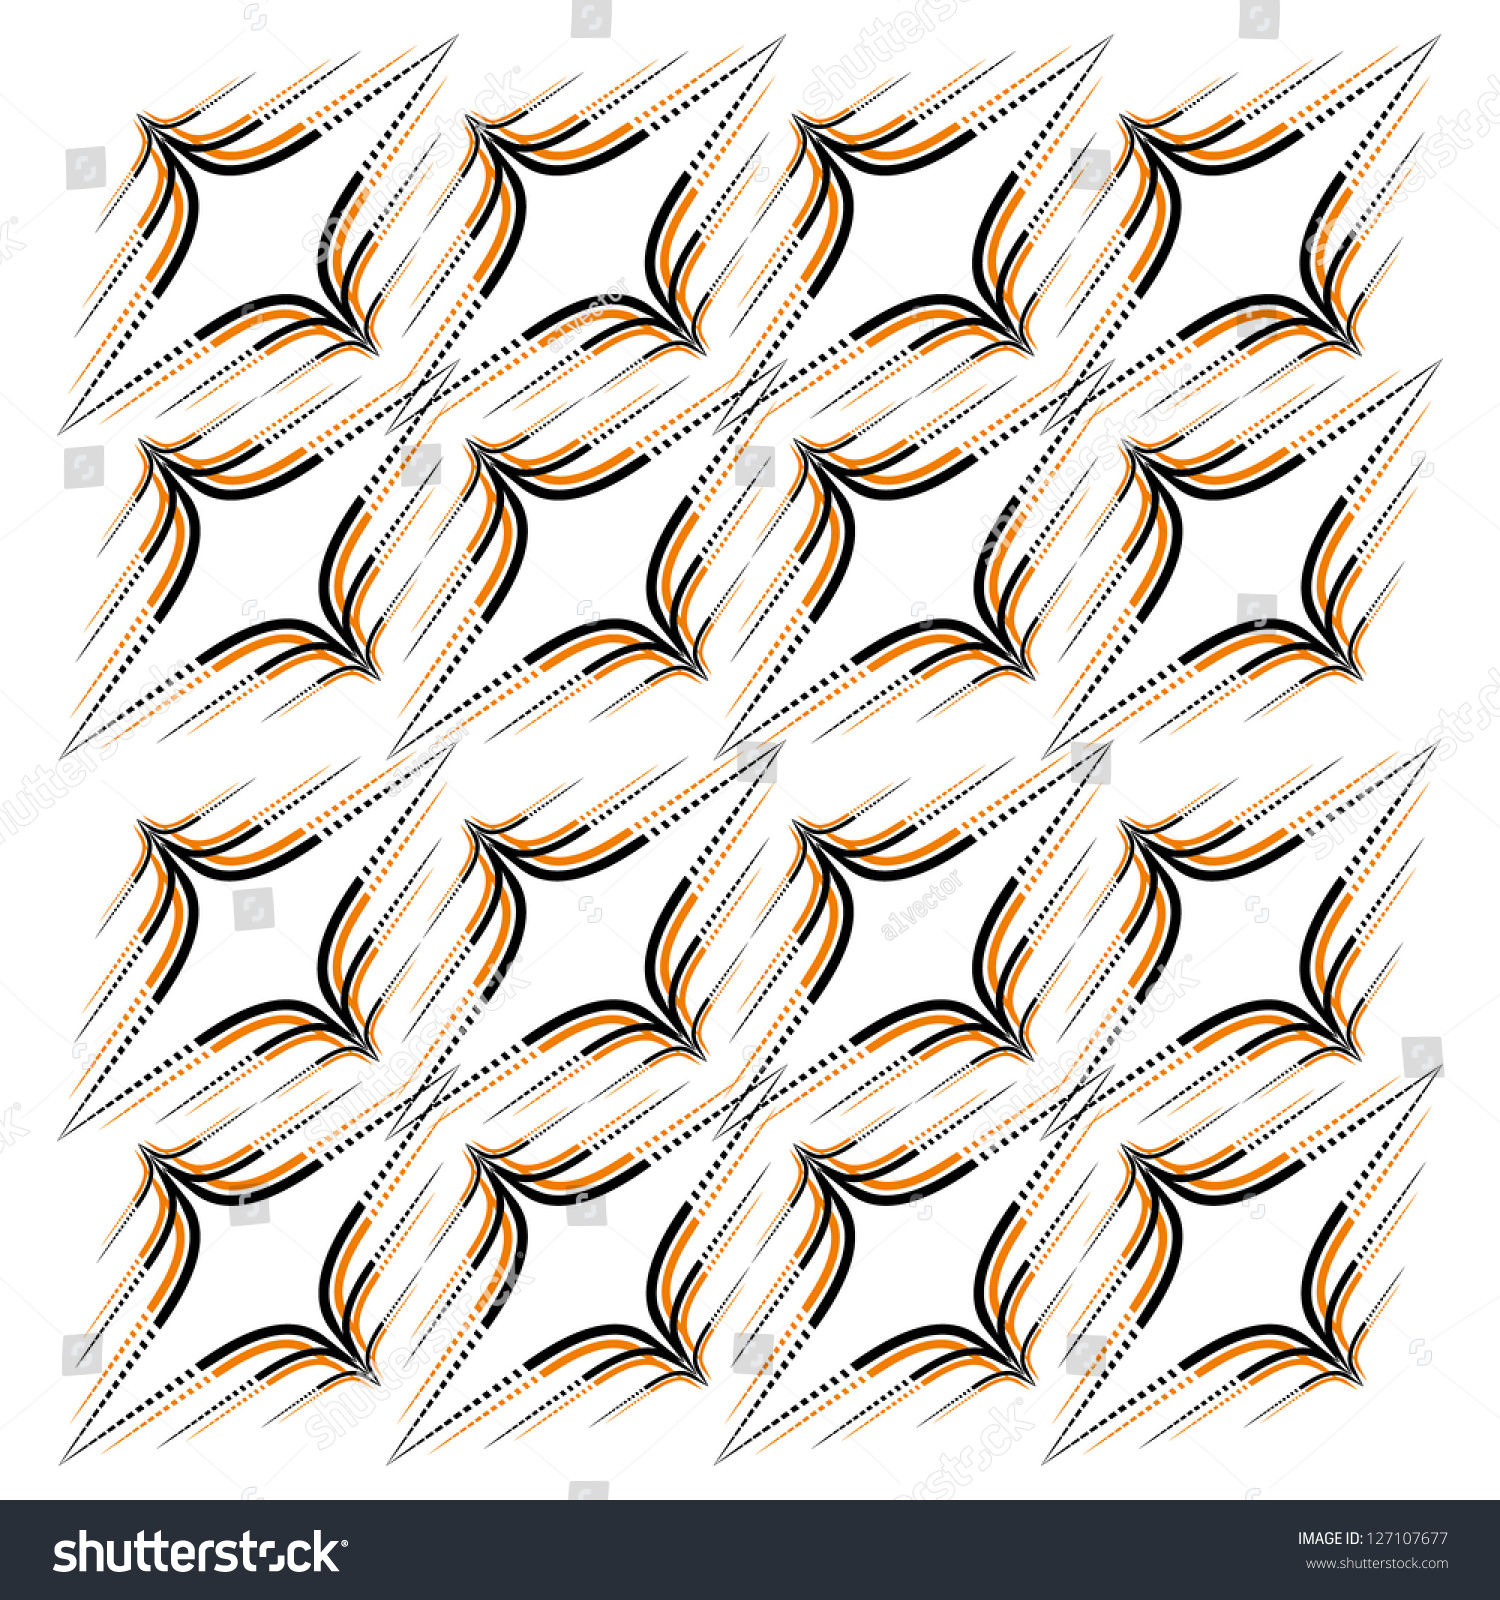 Geometric Pattern Vector Art - 127107677 : Shutterstock